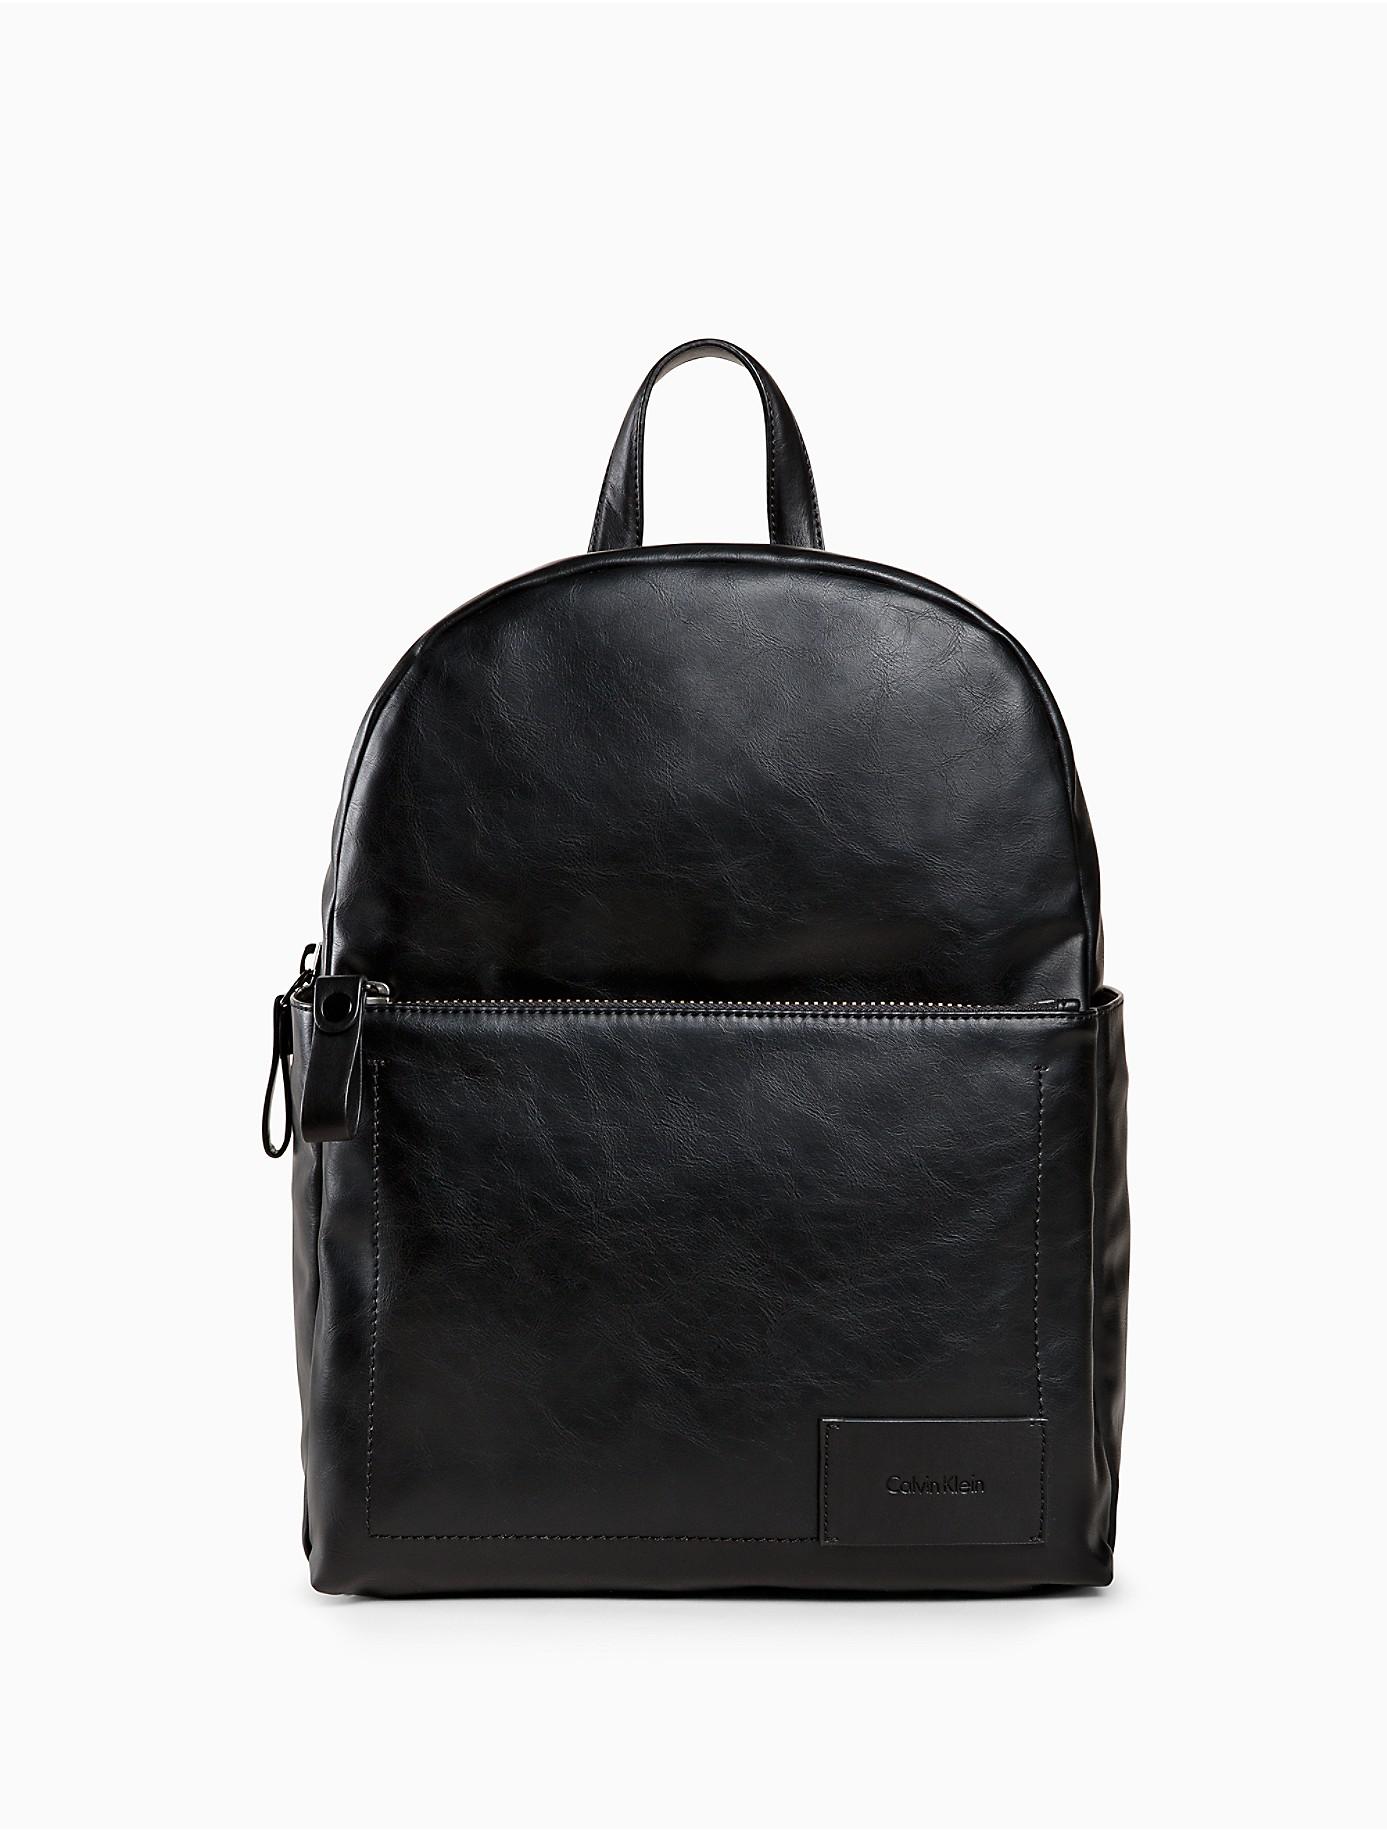 Calvin Klein Campus Backpack in Black for Men - Lyst